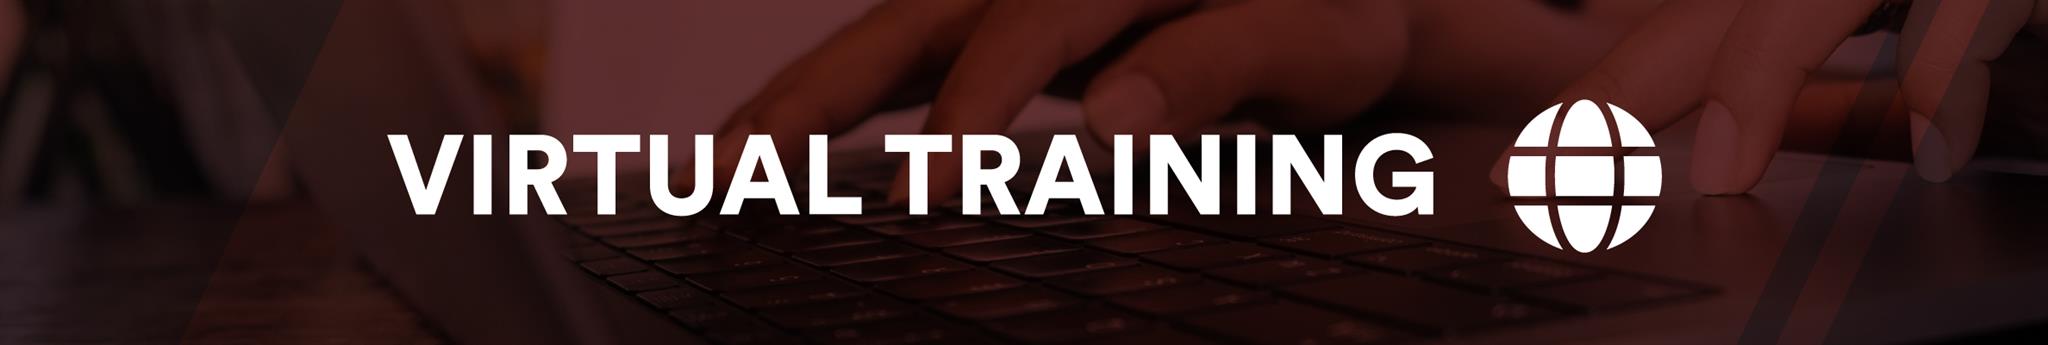 virtual training banner